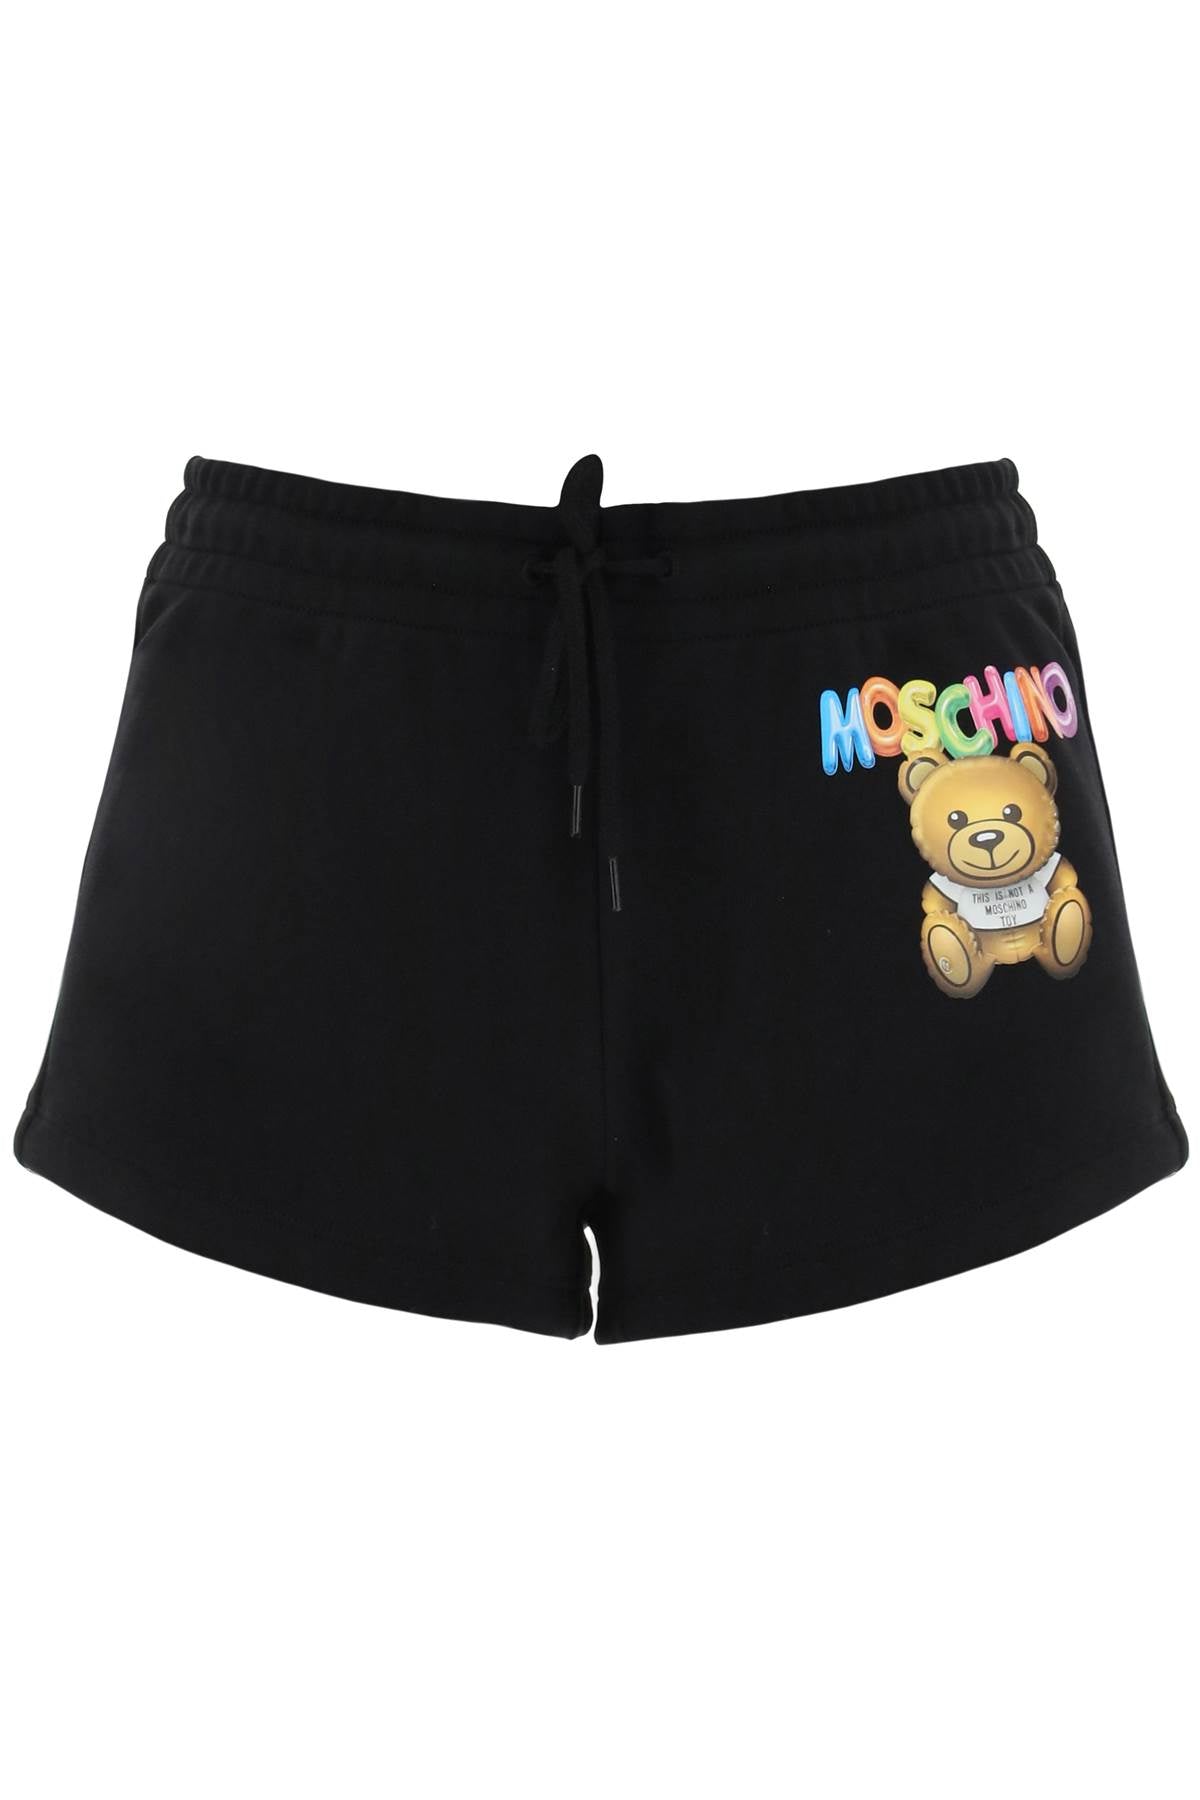 Moschino logo printed shorts-0